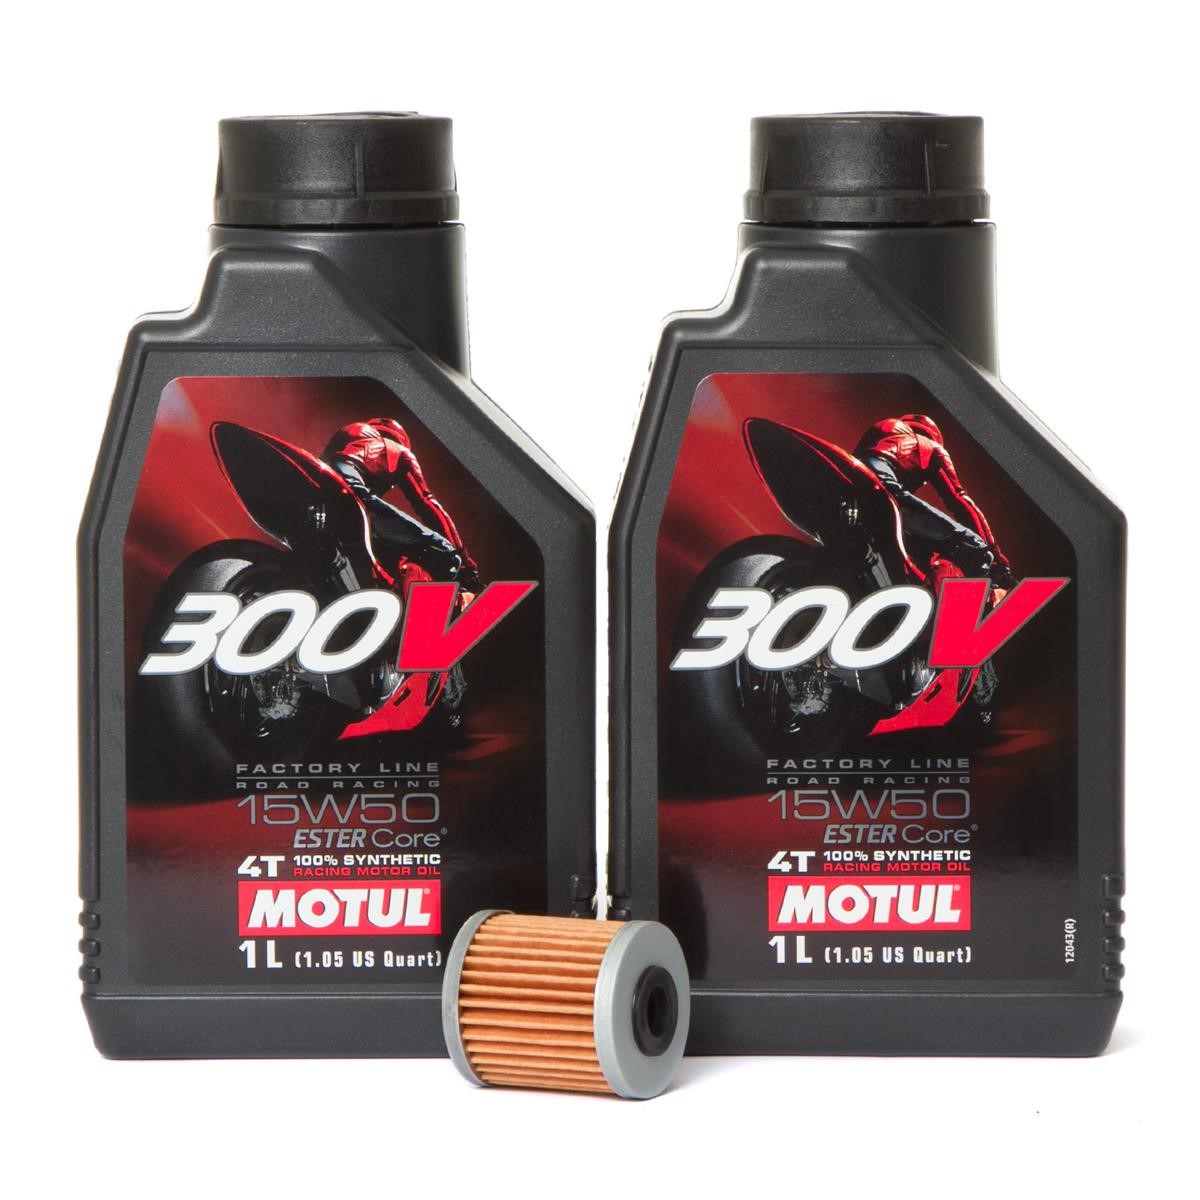 Motul Motorenöl-Set 15W50 inkl. Ölfilter für GasGas, Honda, Kawasaki